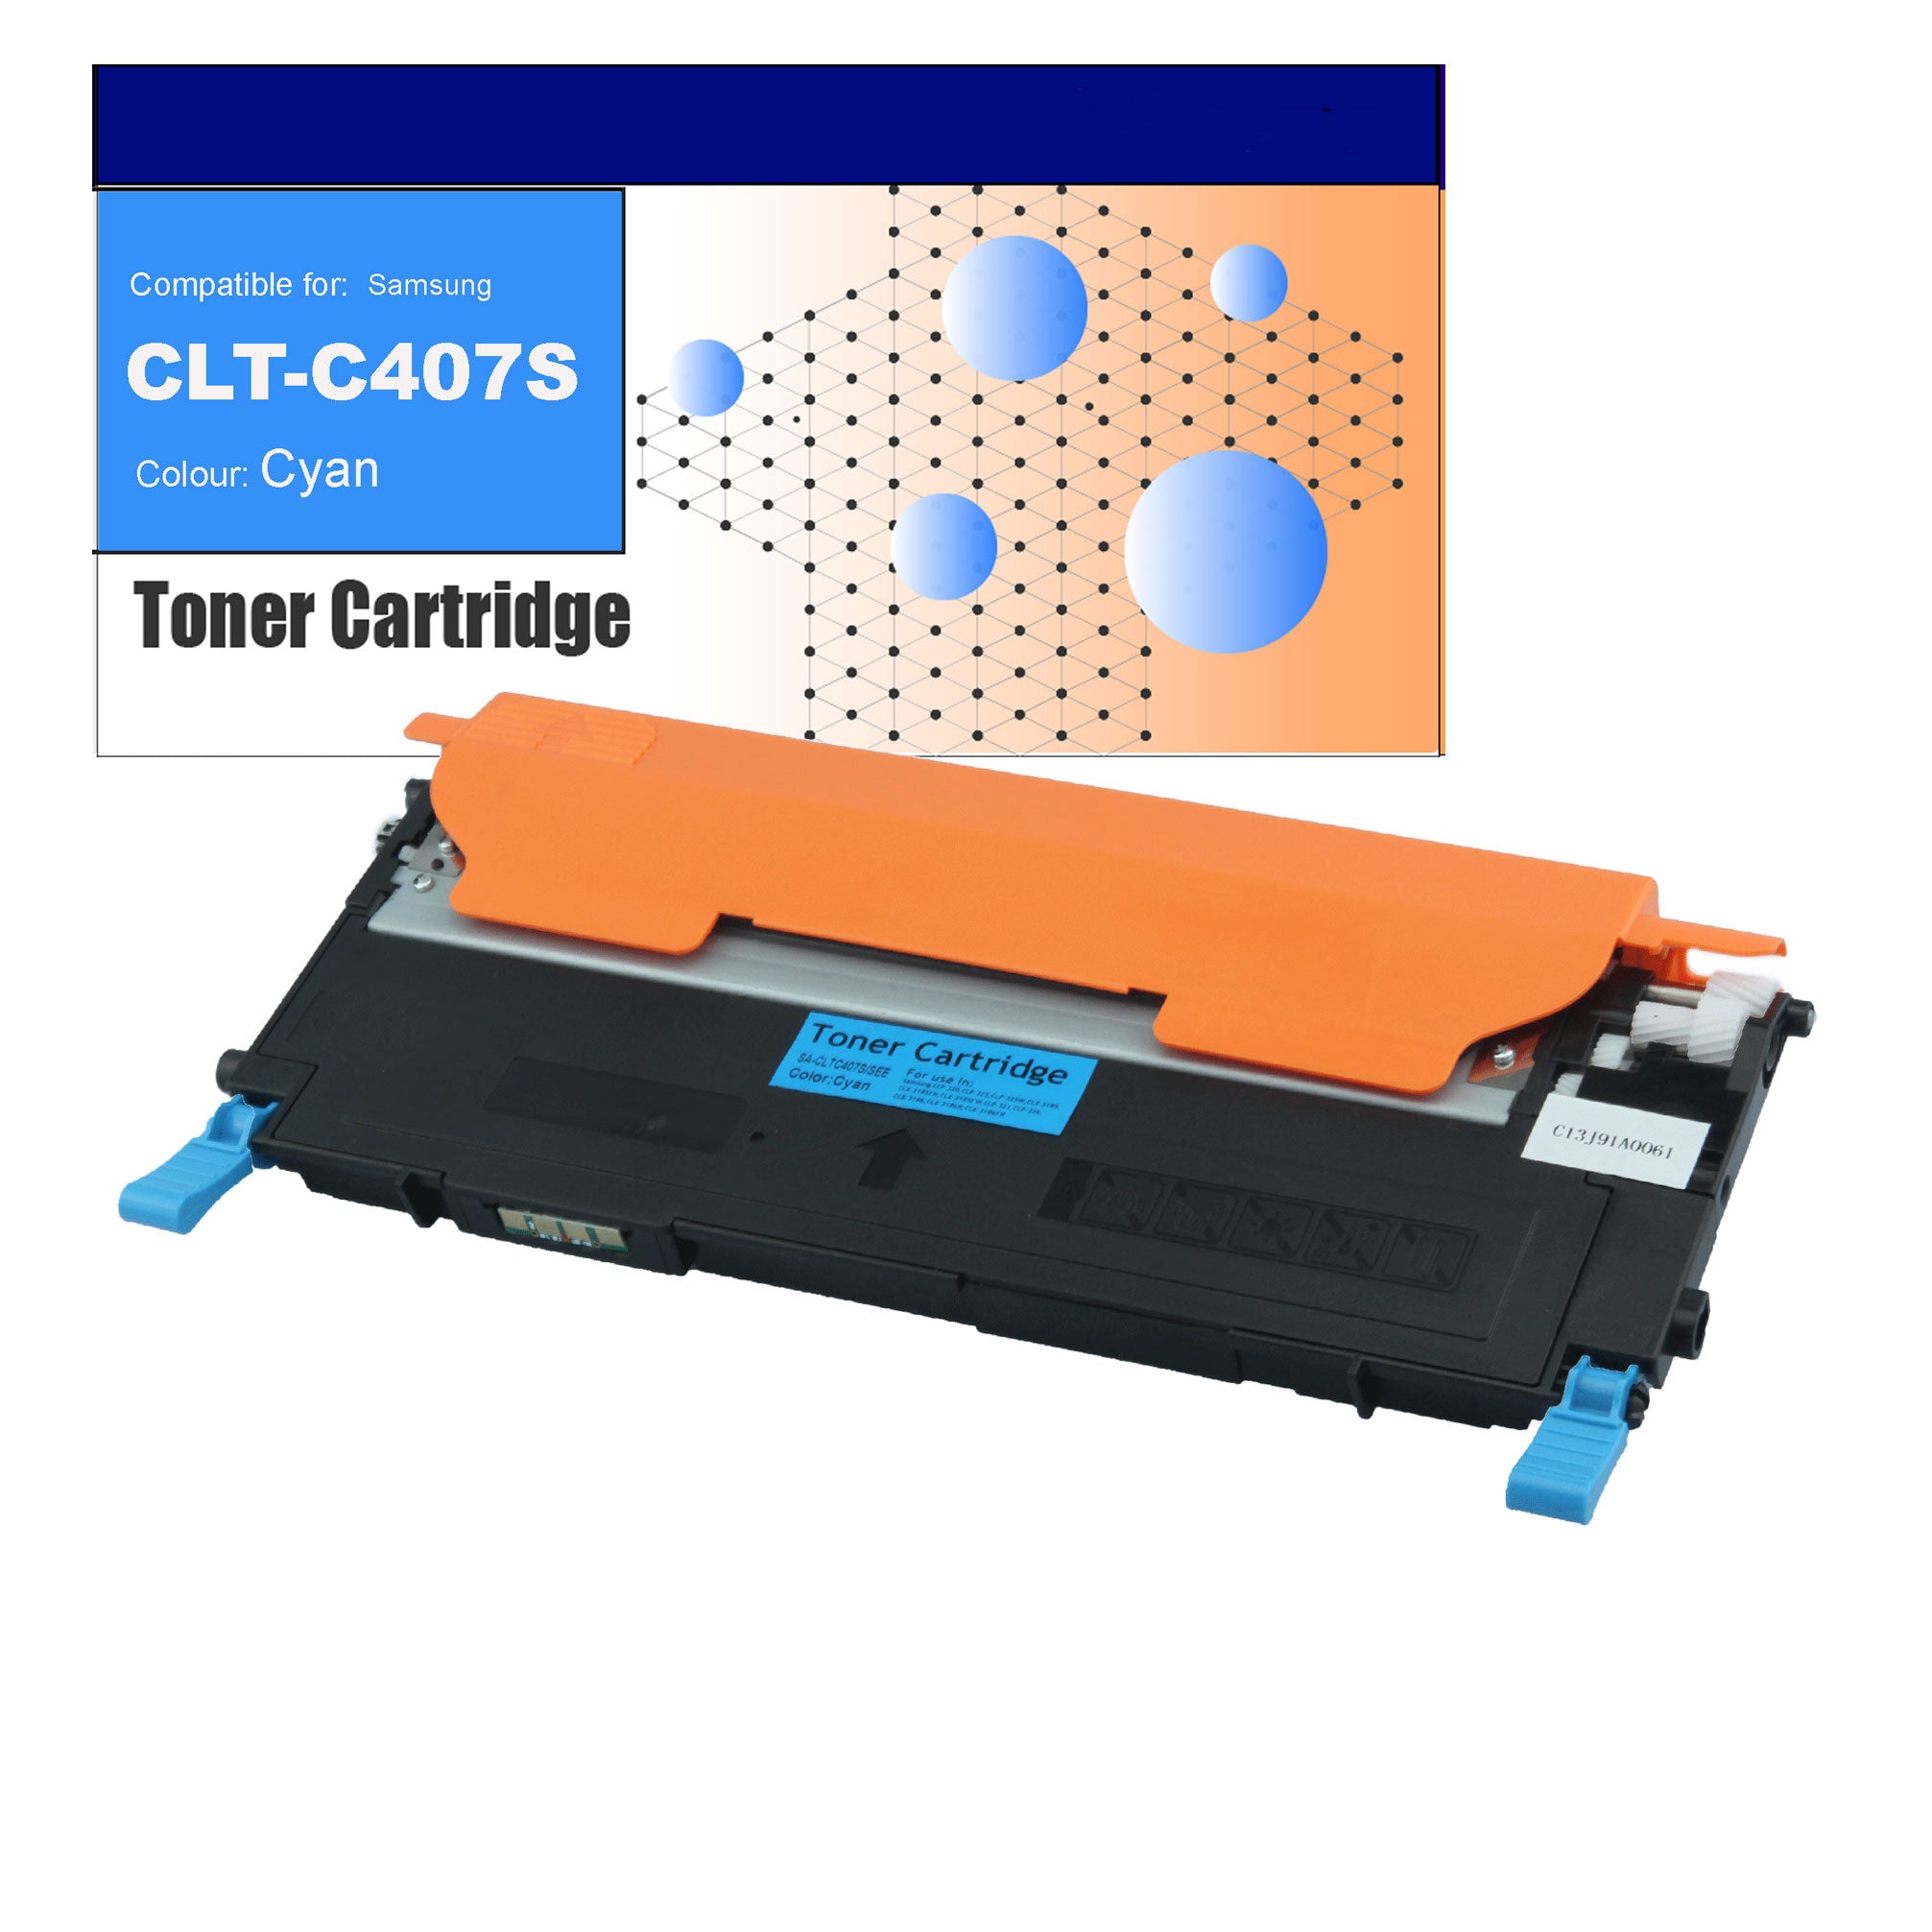 Compatible Toner for Samsung CLT-C407S (ST998A) Cyan Toner Cartridges